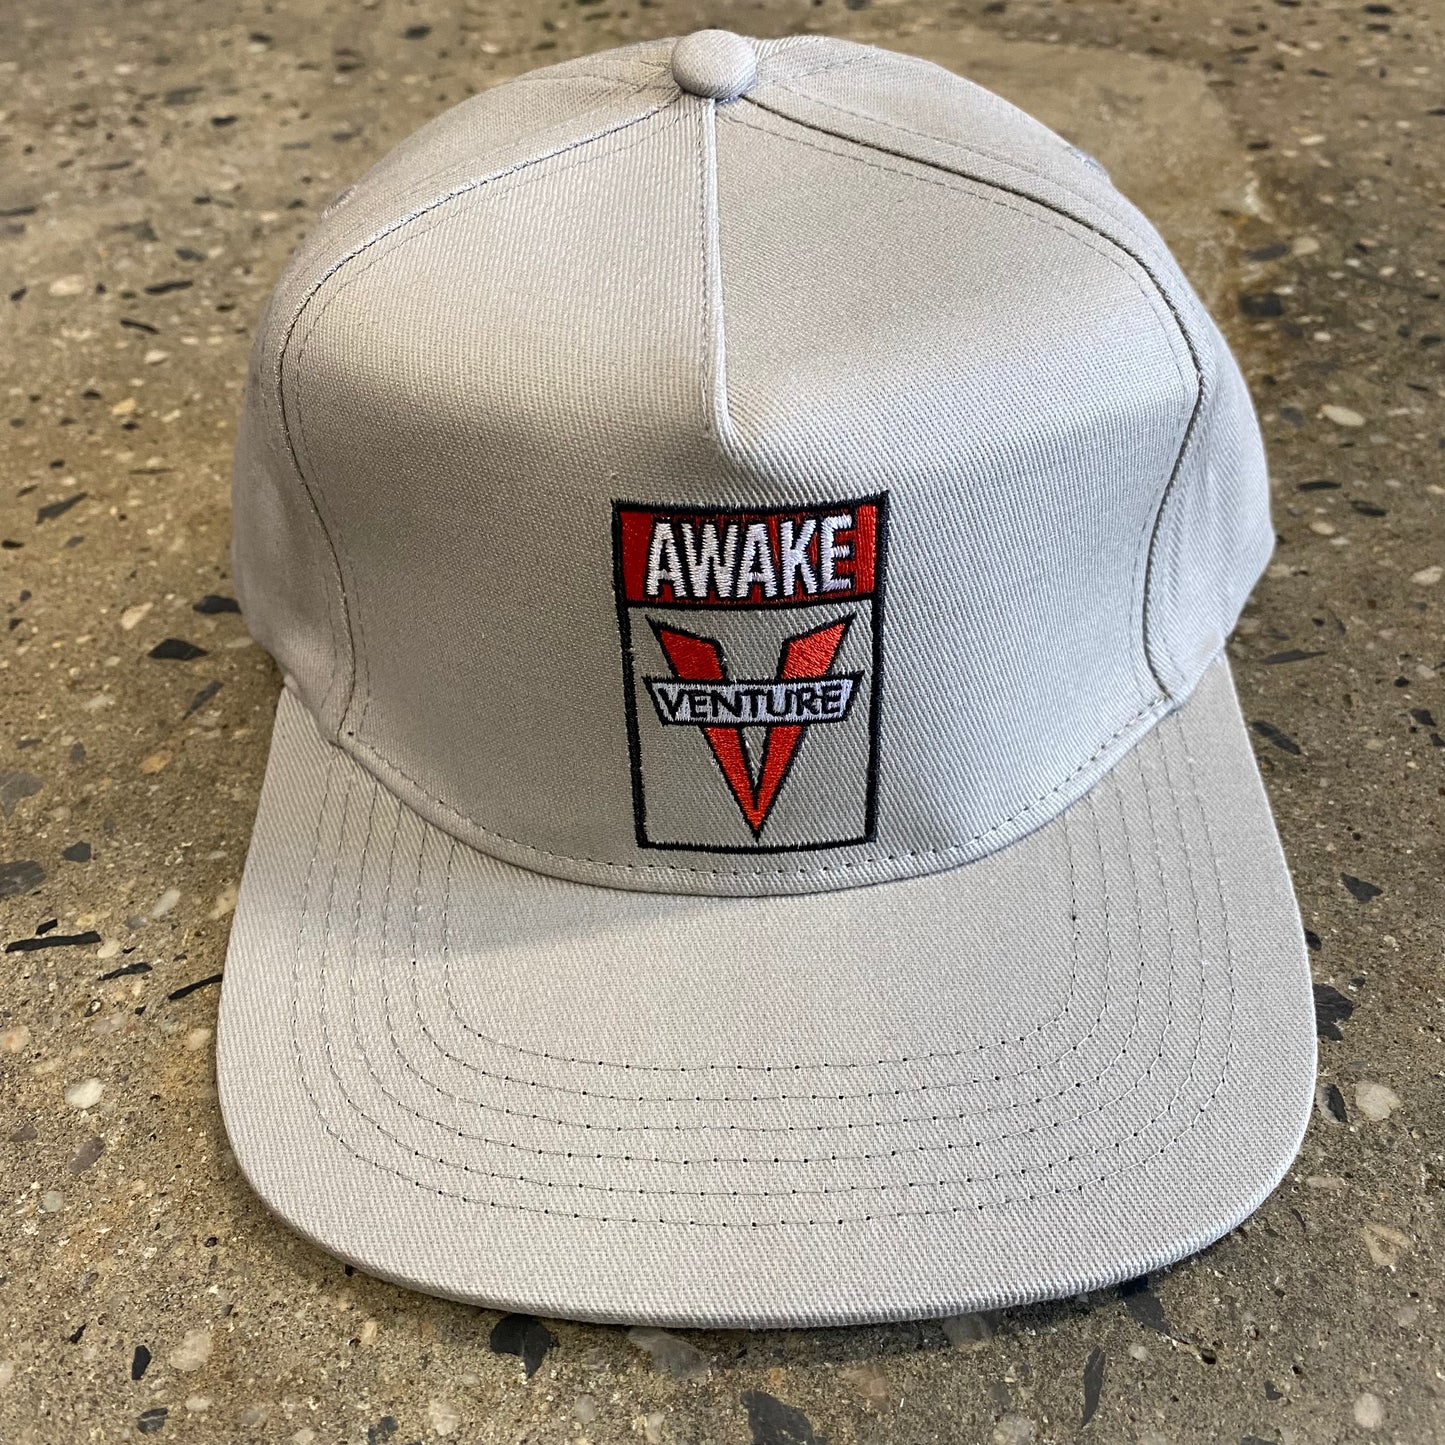 Venture Awake Snapback Hat - Silver/Red